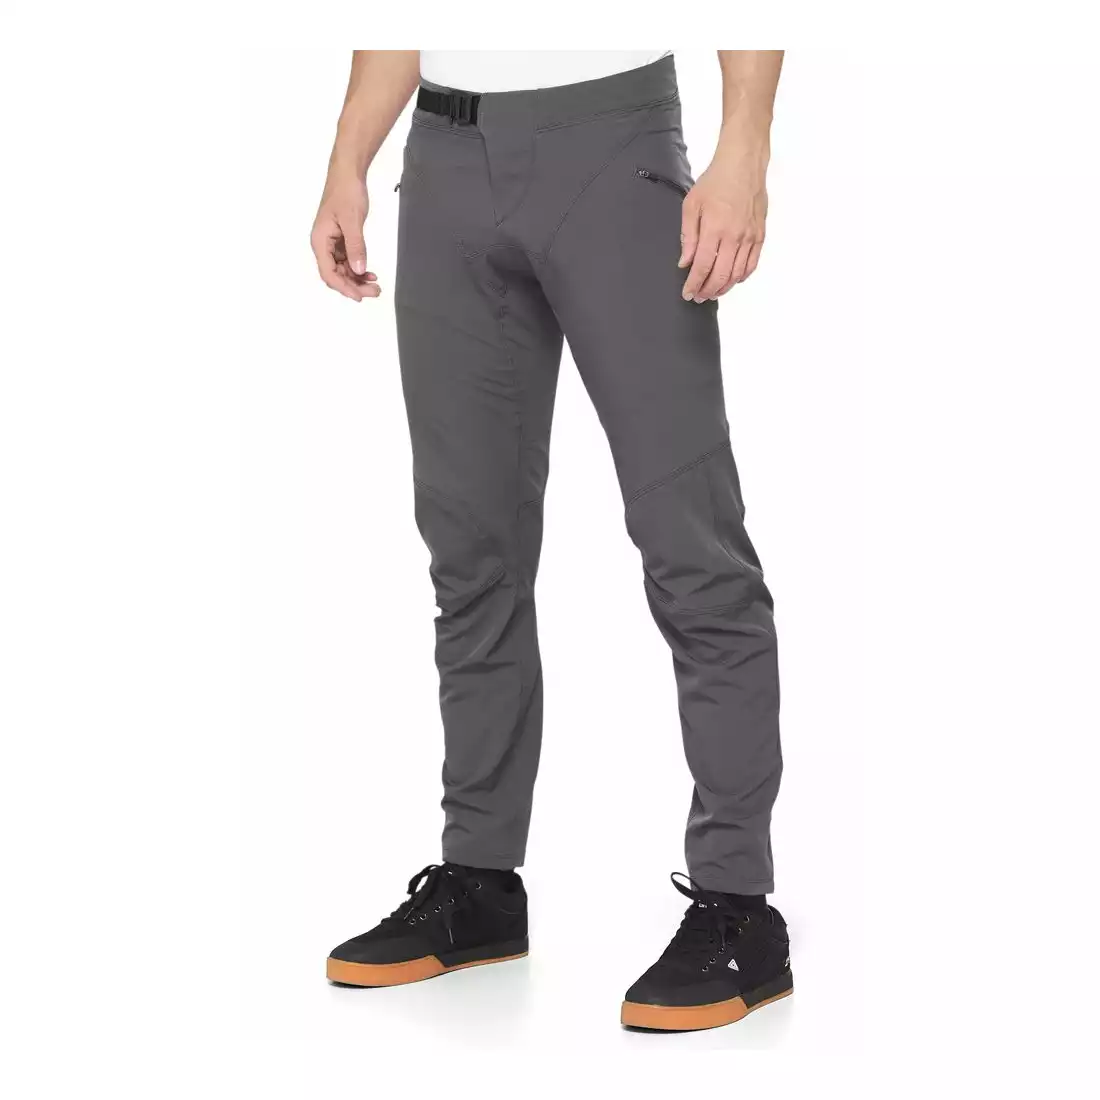 100% AIRMATIC Men's cycling pants, grey